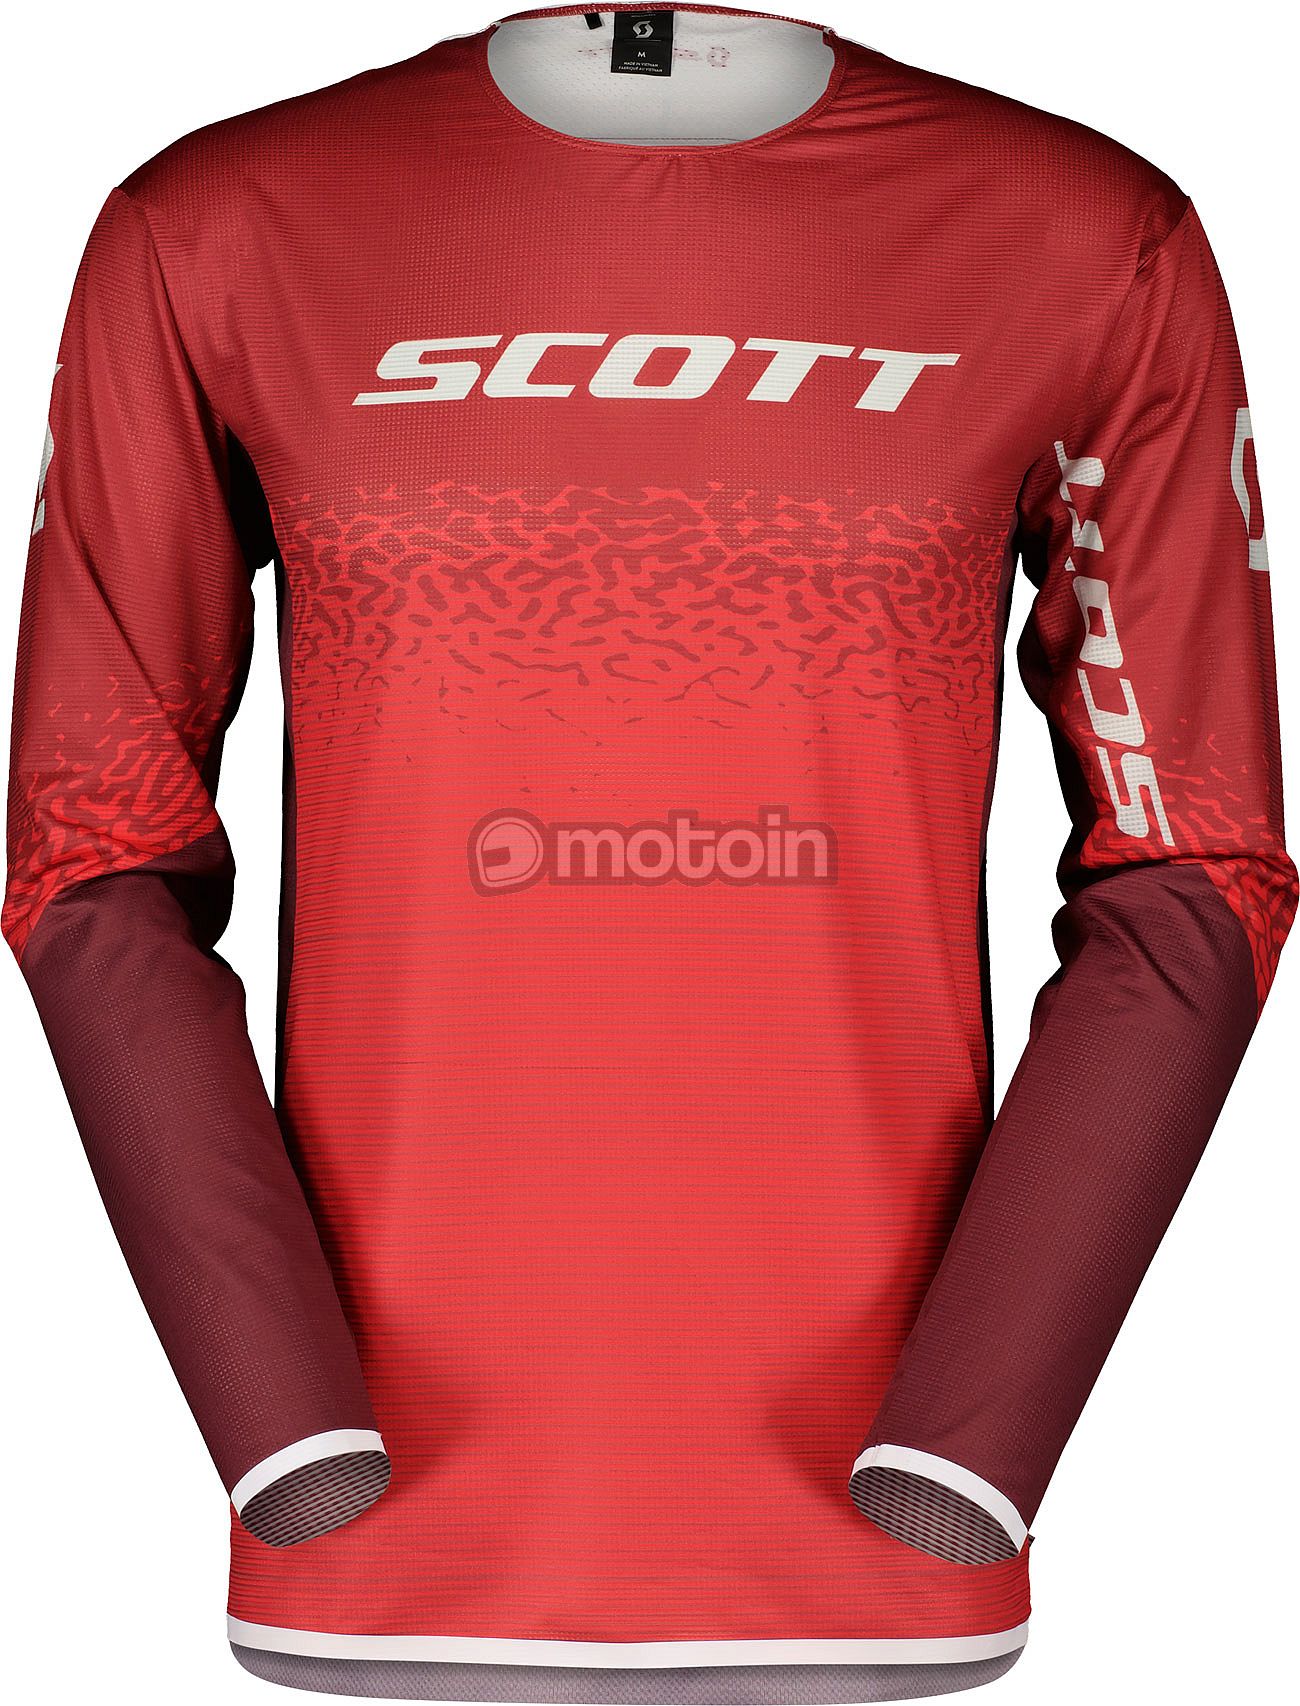 Scott Podium Pro S24, jersey